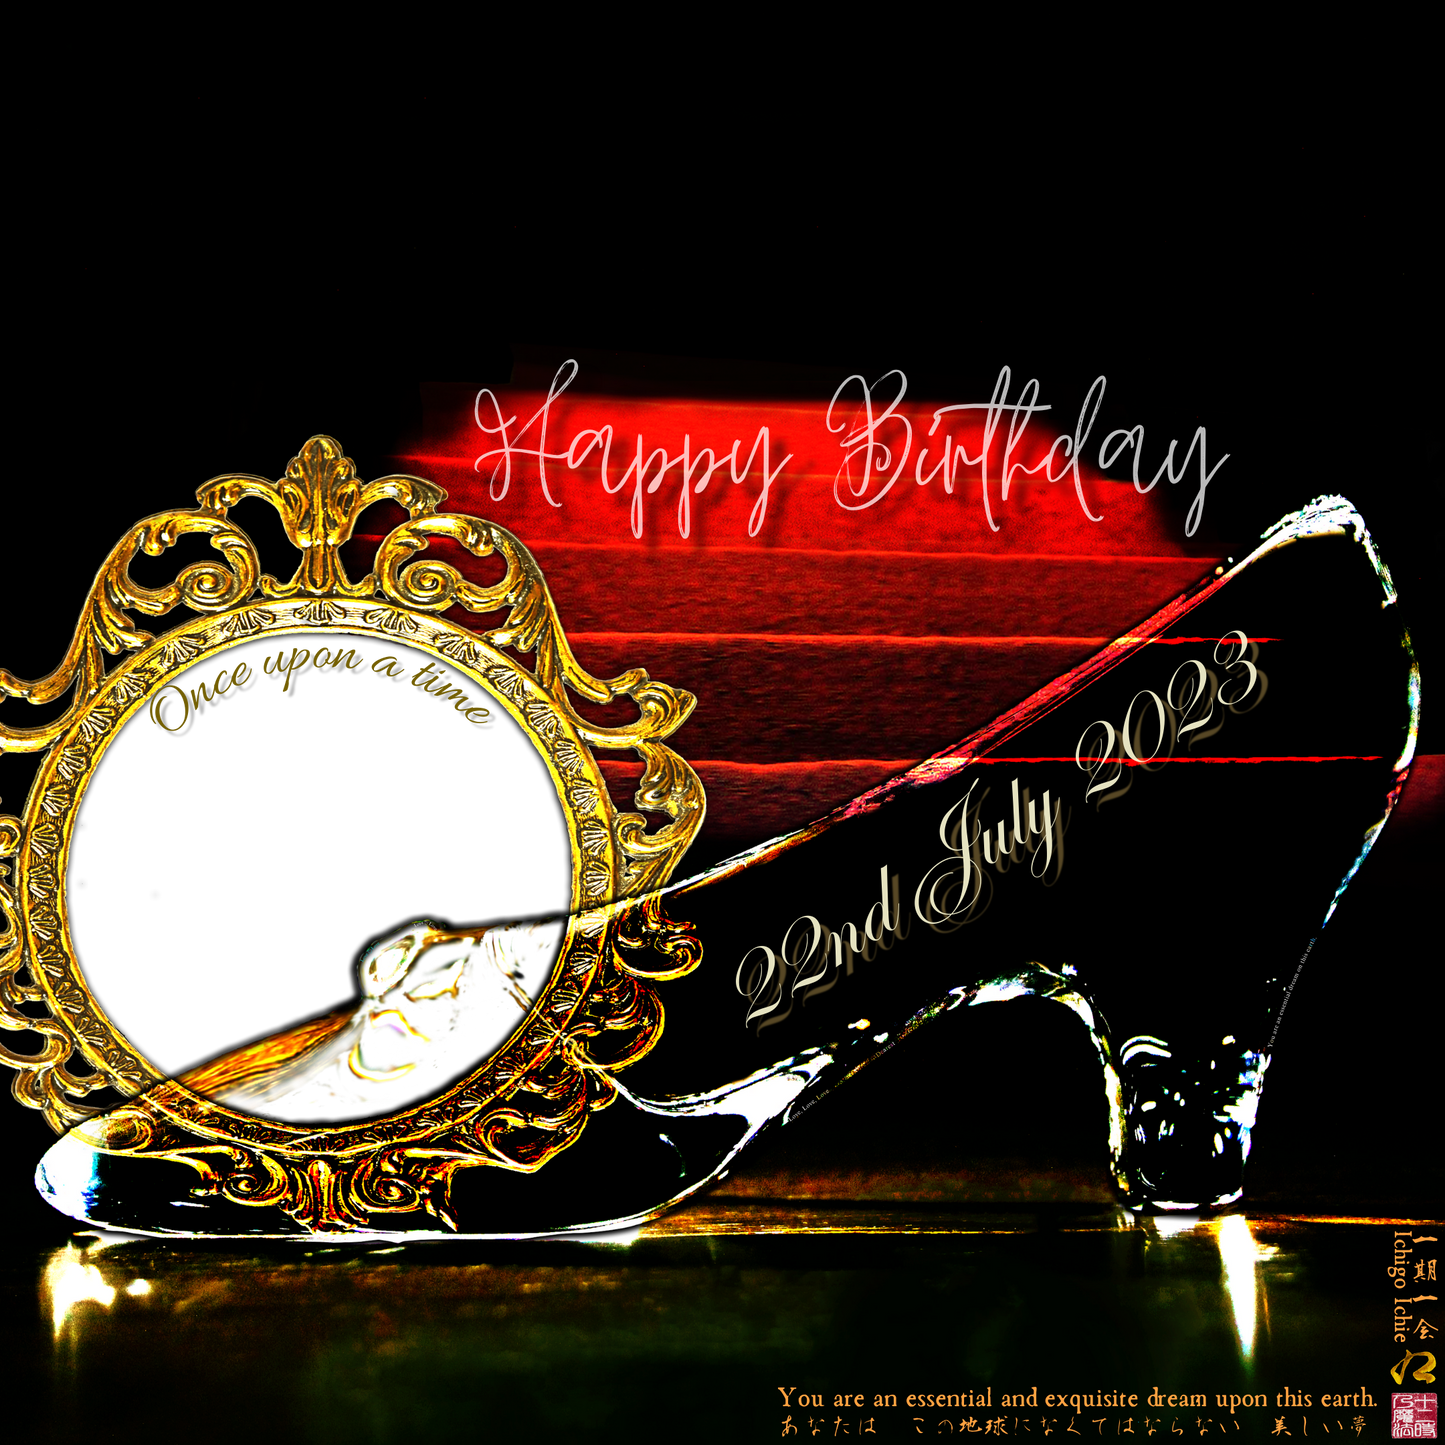 Happy Birthday Glass Slipper "Ichigo Ichie" 22nd July 2023 the Left (1-of-1) NFT Art